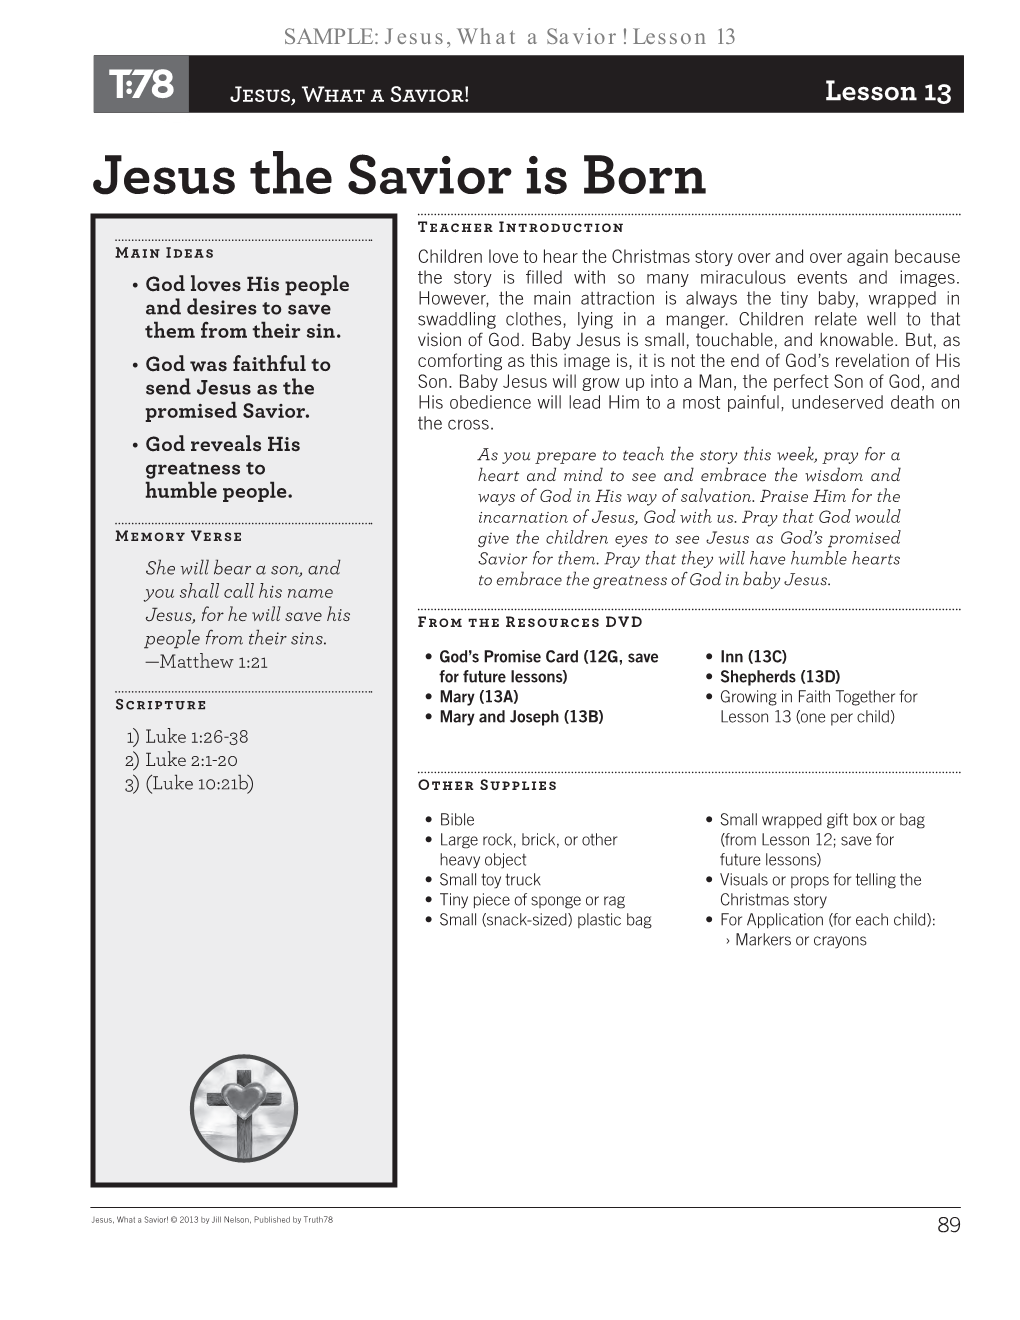 Jesus the Savior Is Born